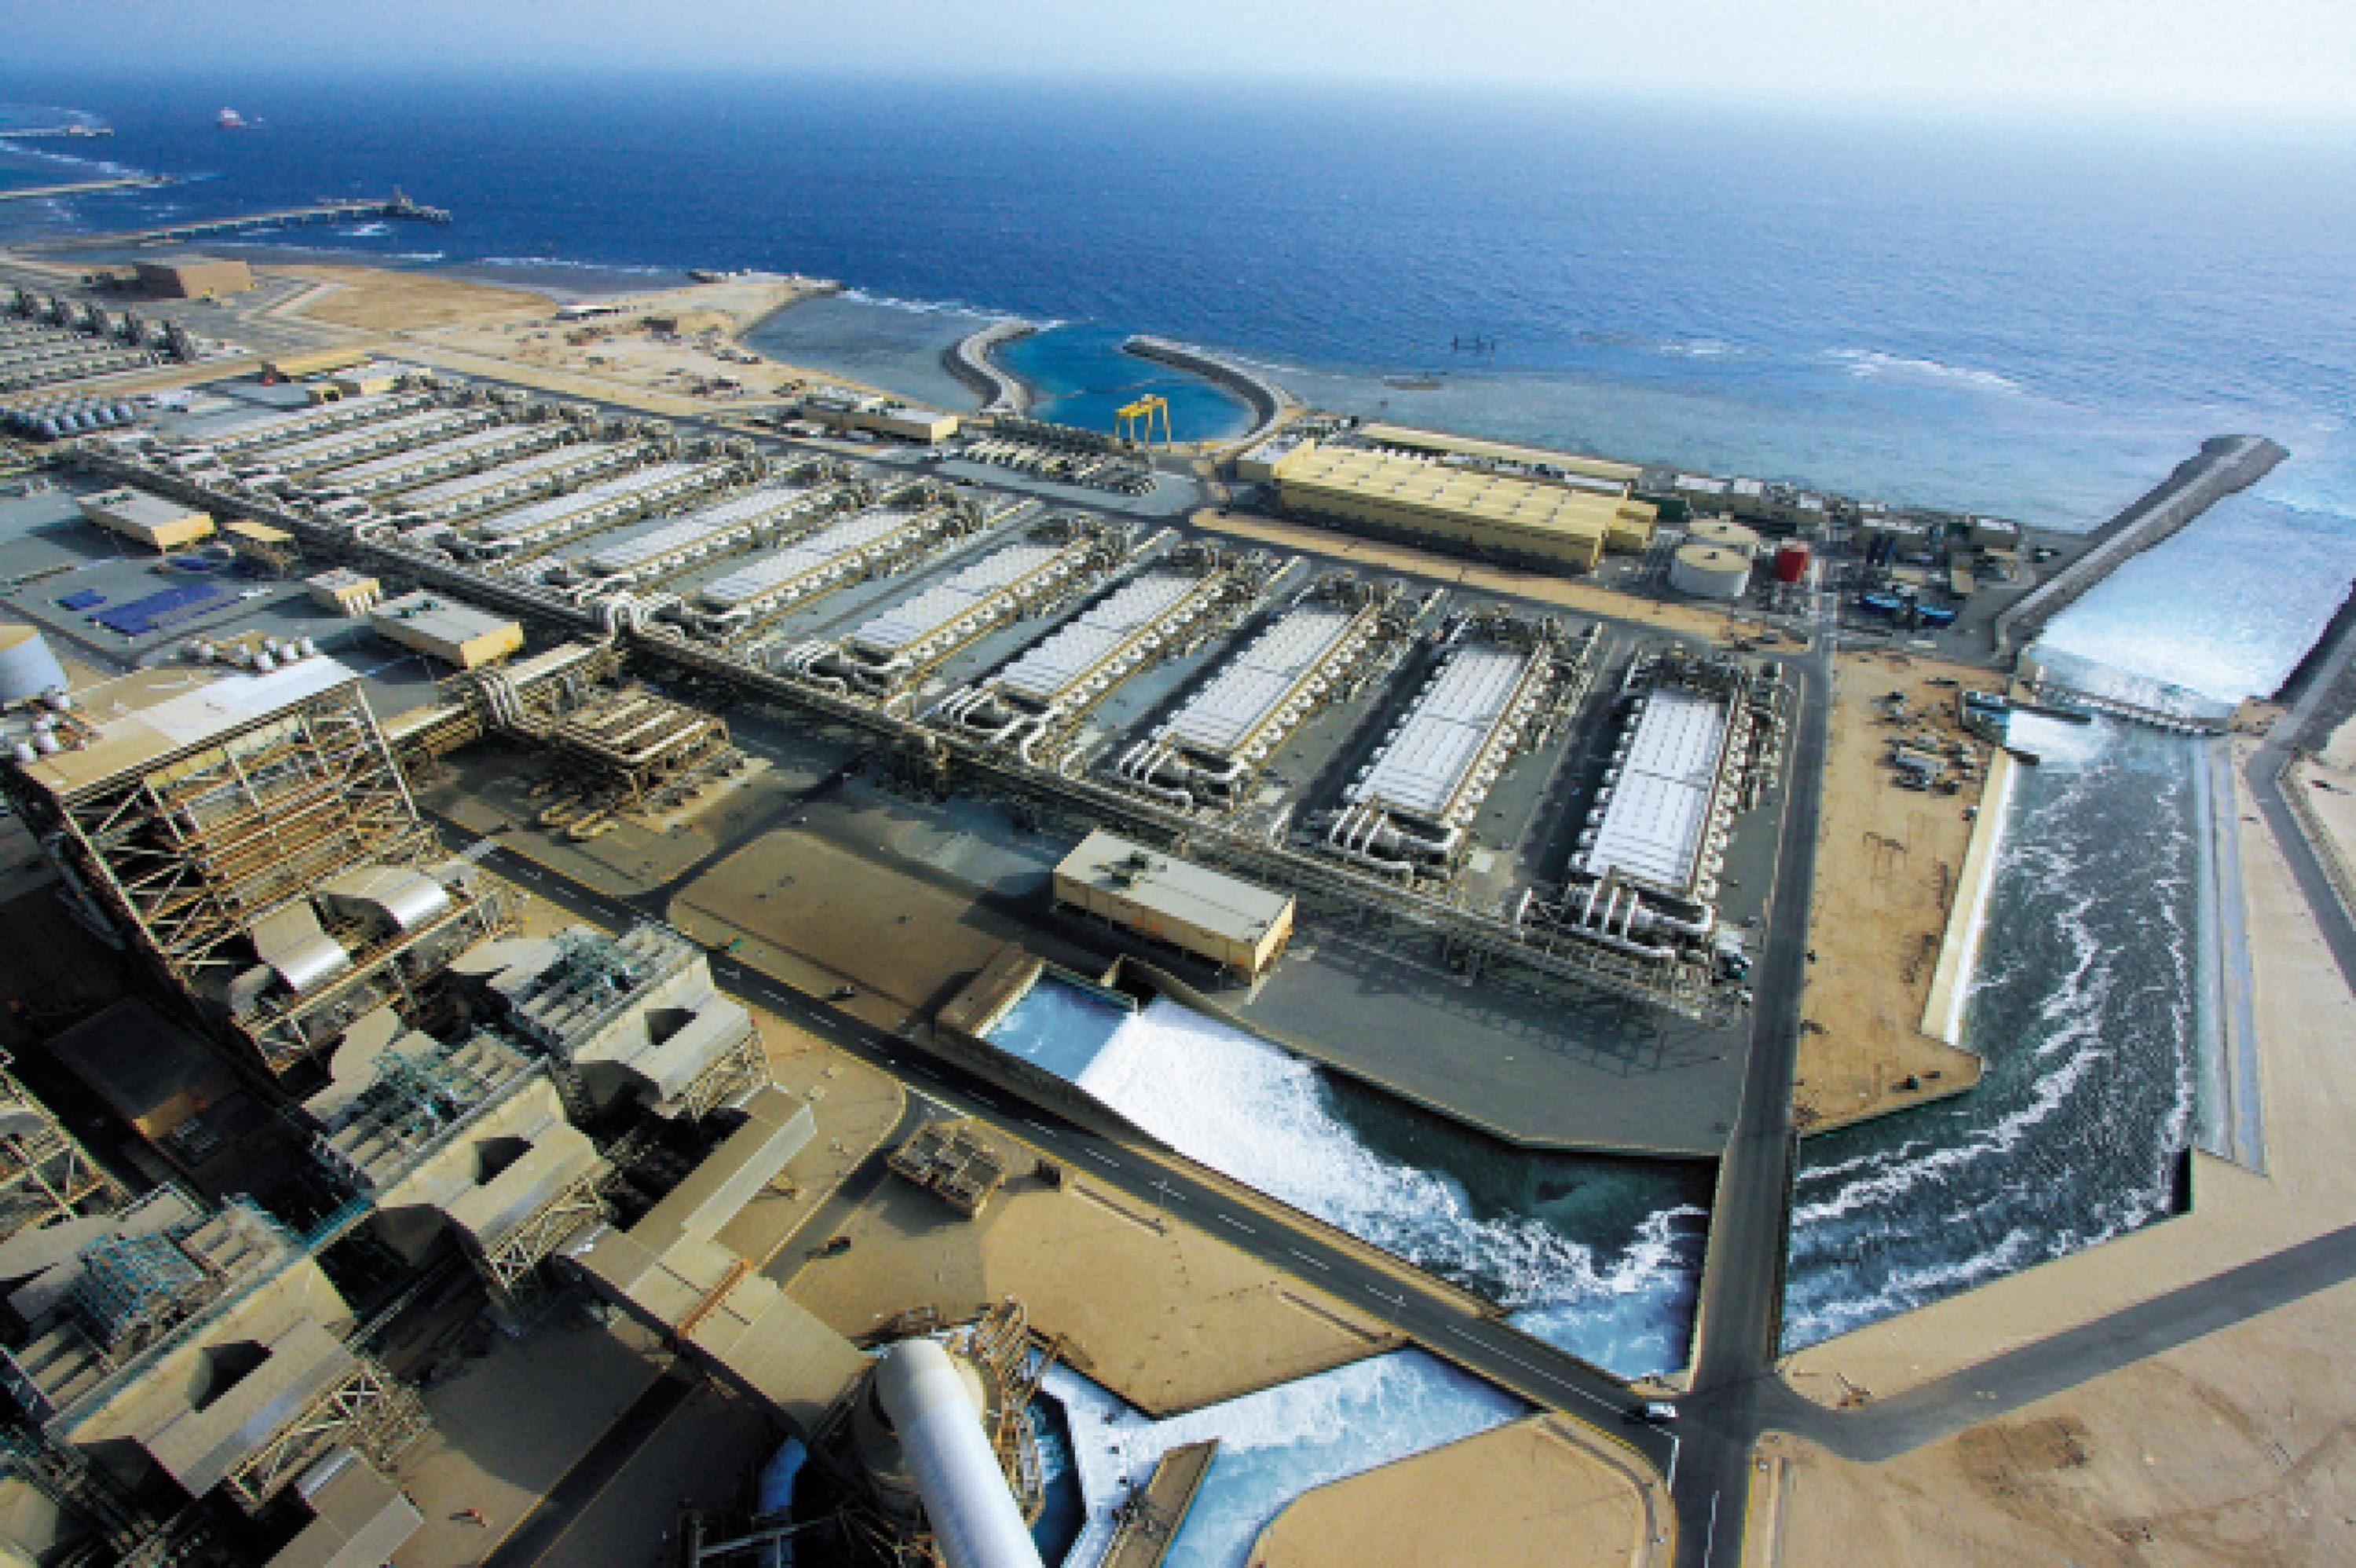 reverse osmosis desalination